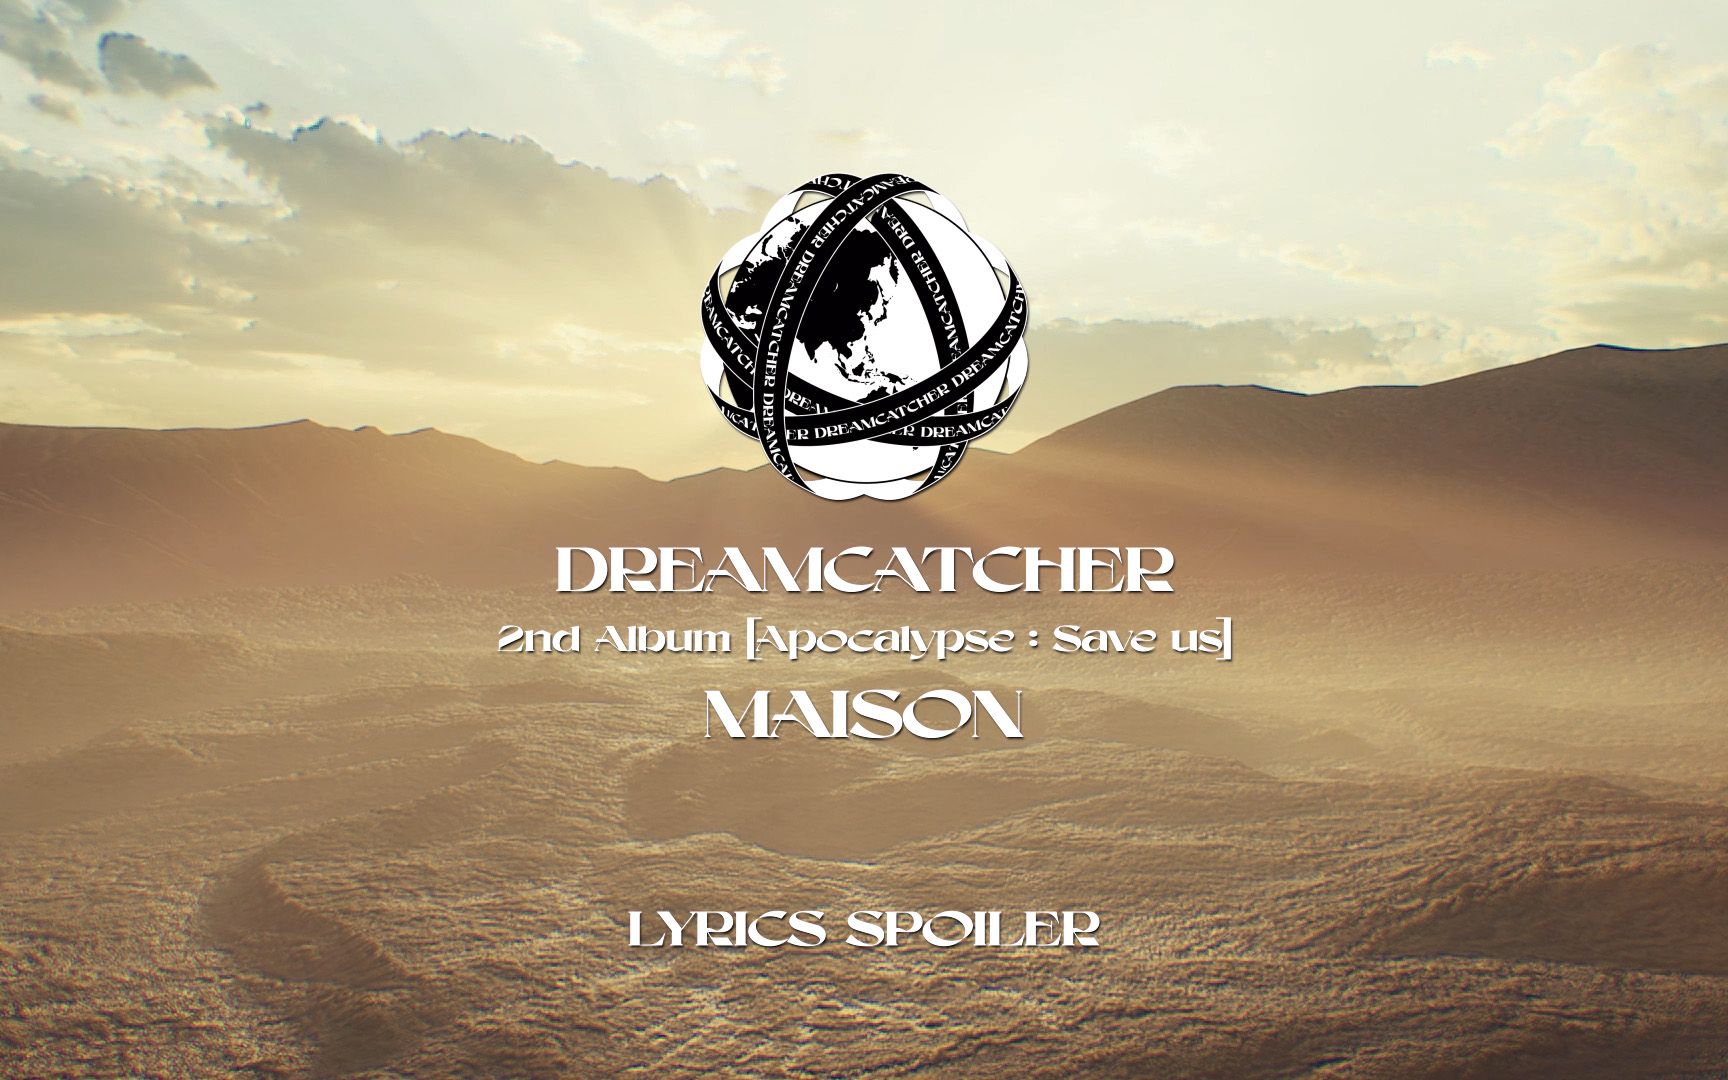 Dreamcatcher 'MAISON' Lyrics Spoiler